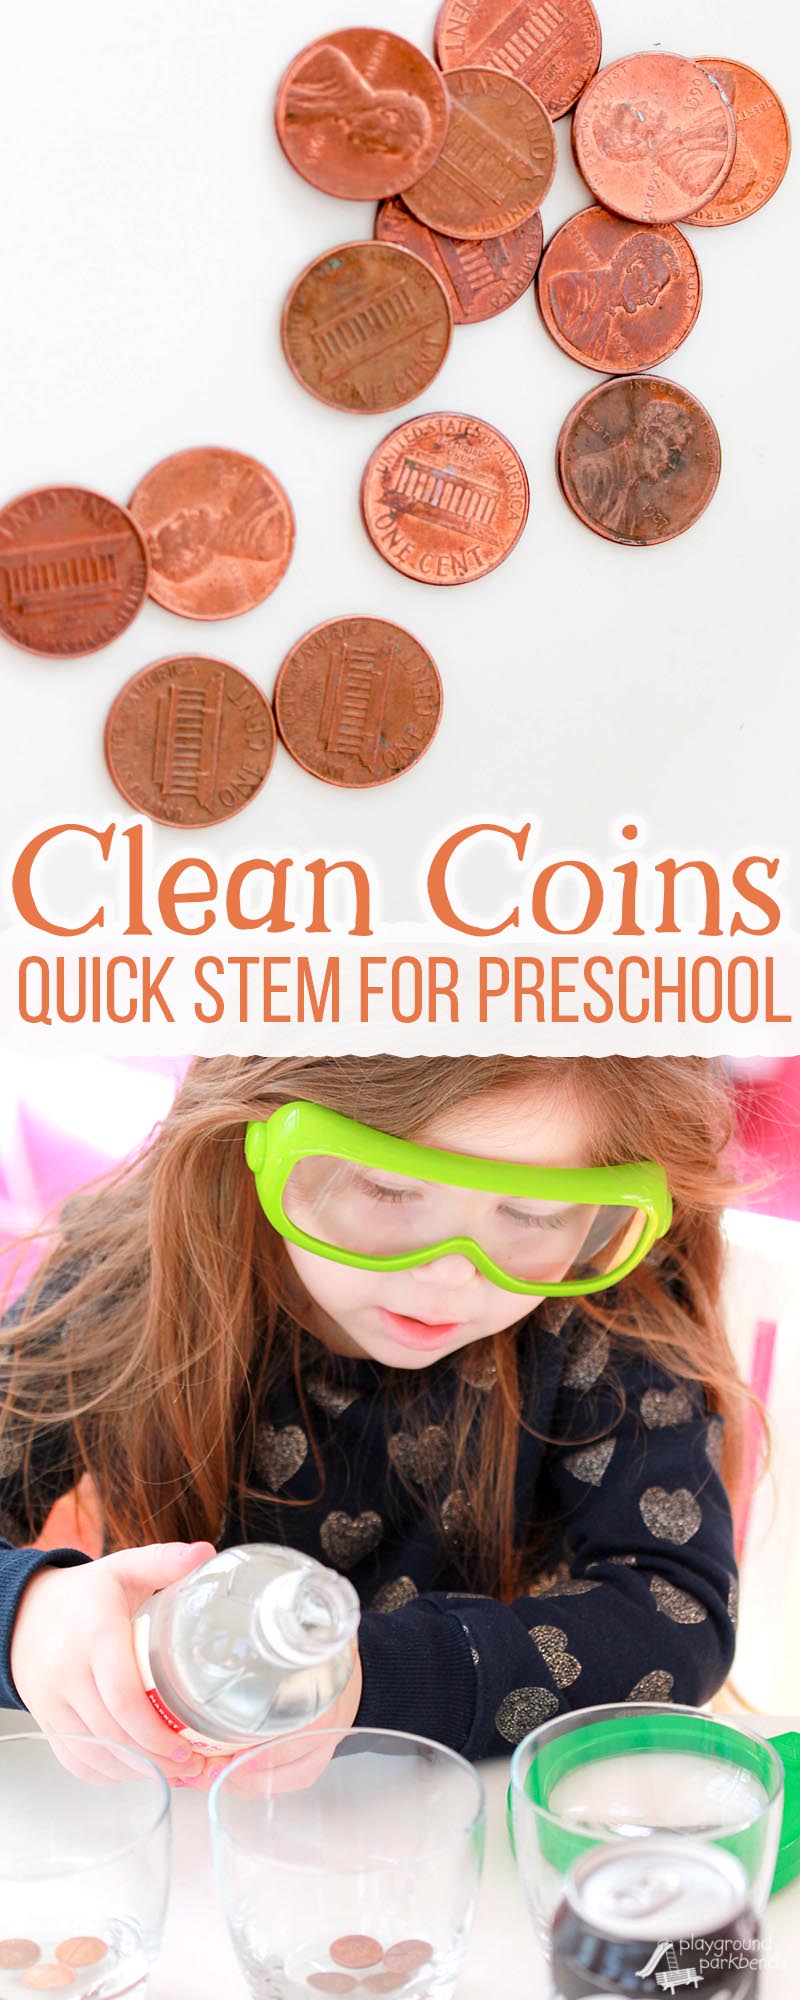 Clean Coins: A Quick STEM Activity for Preschool